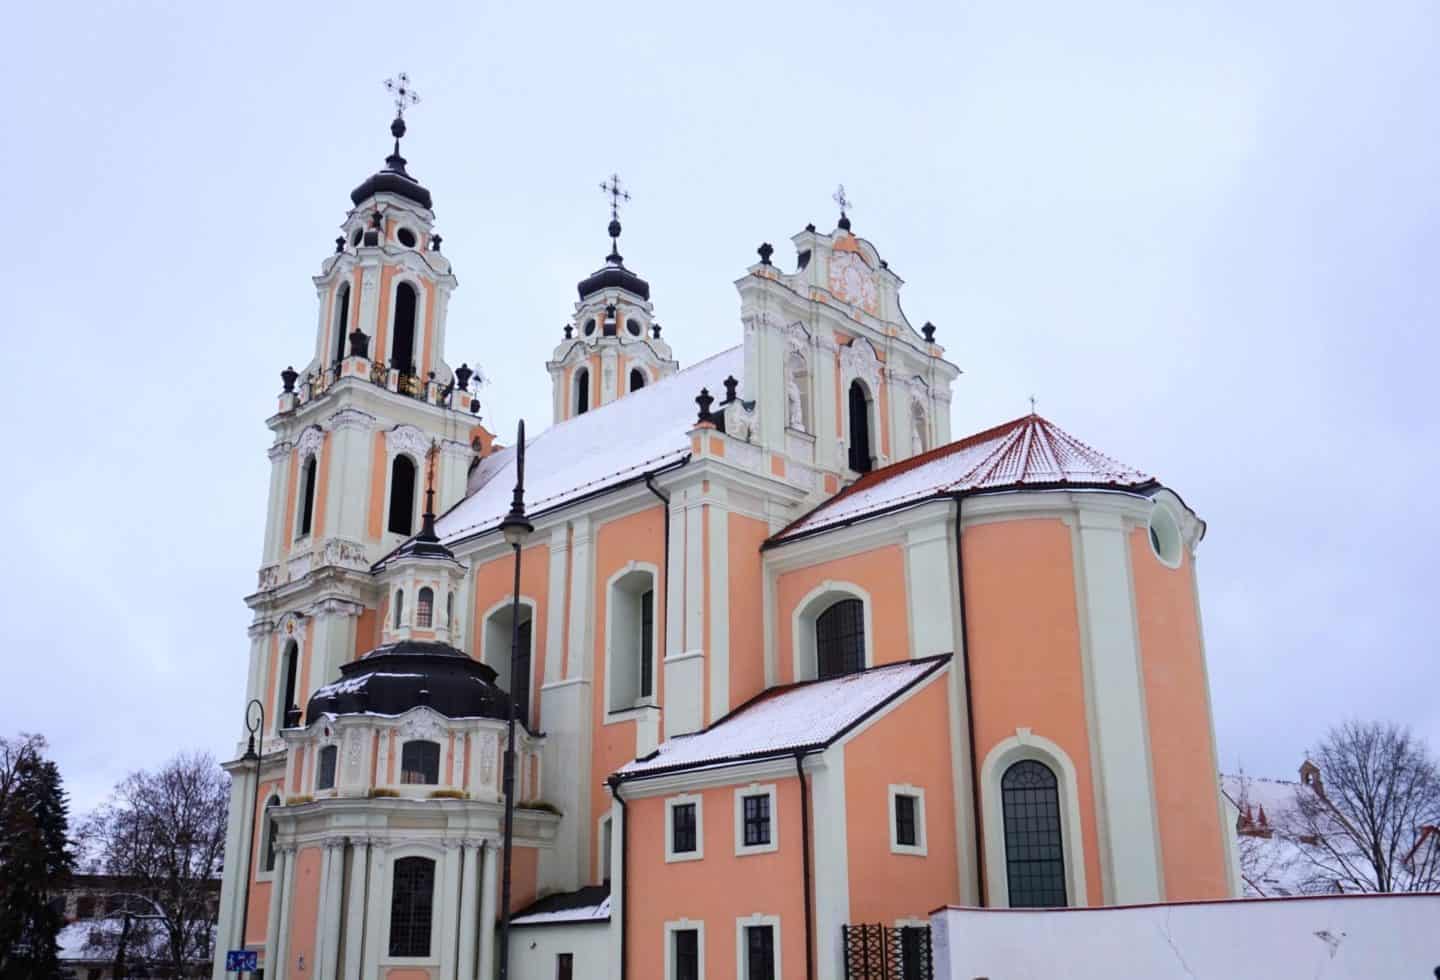 reasons to visit Vilnius, church architecture